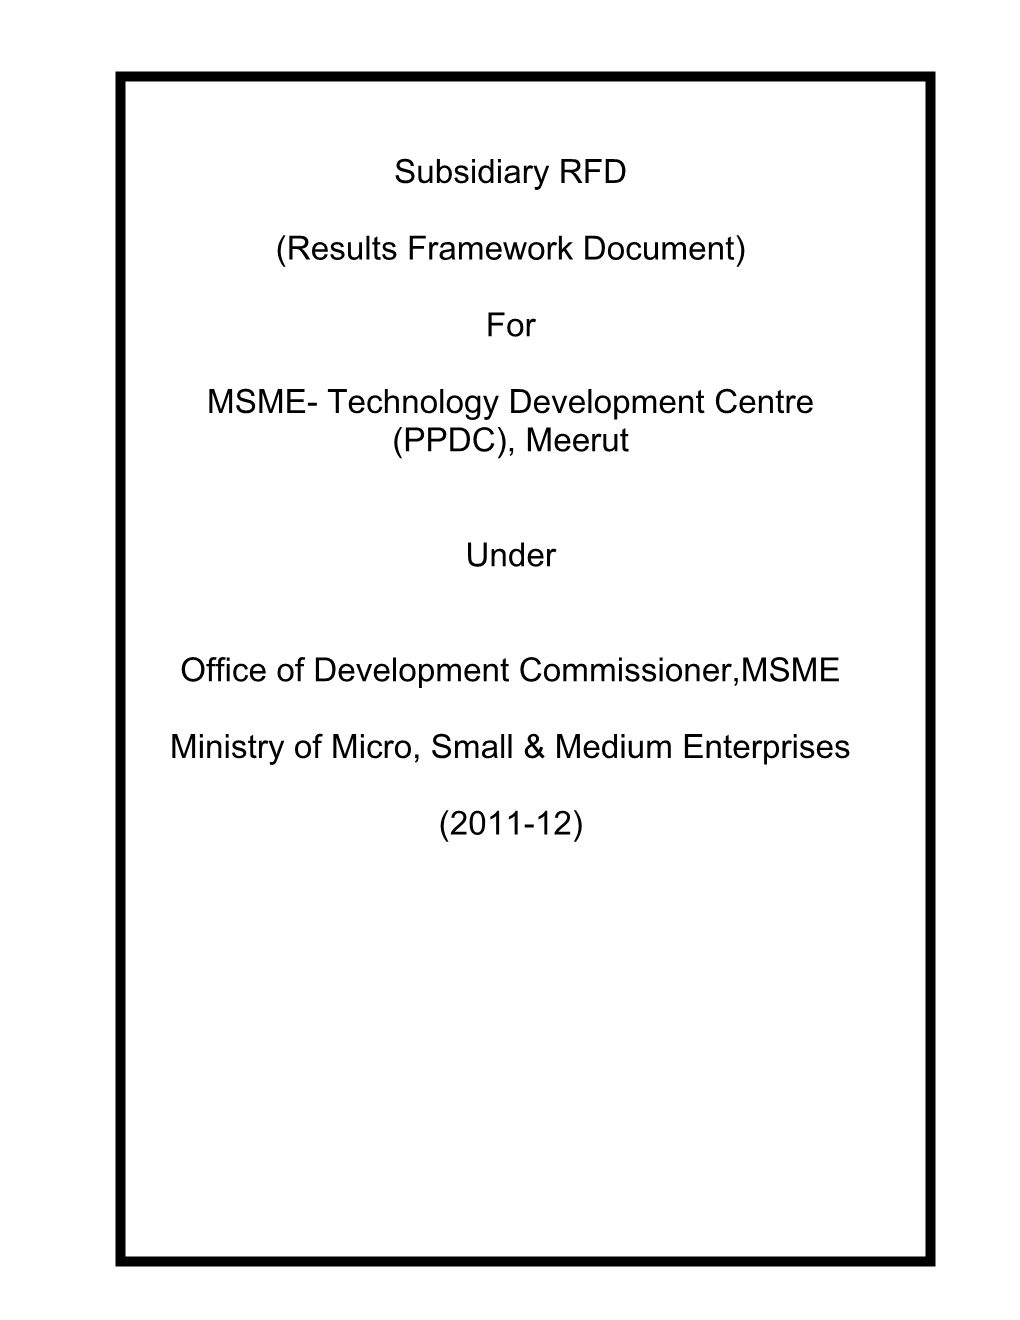 MSME- Technology Development Centre (PPDC), Meerut